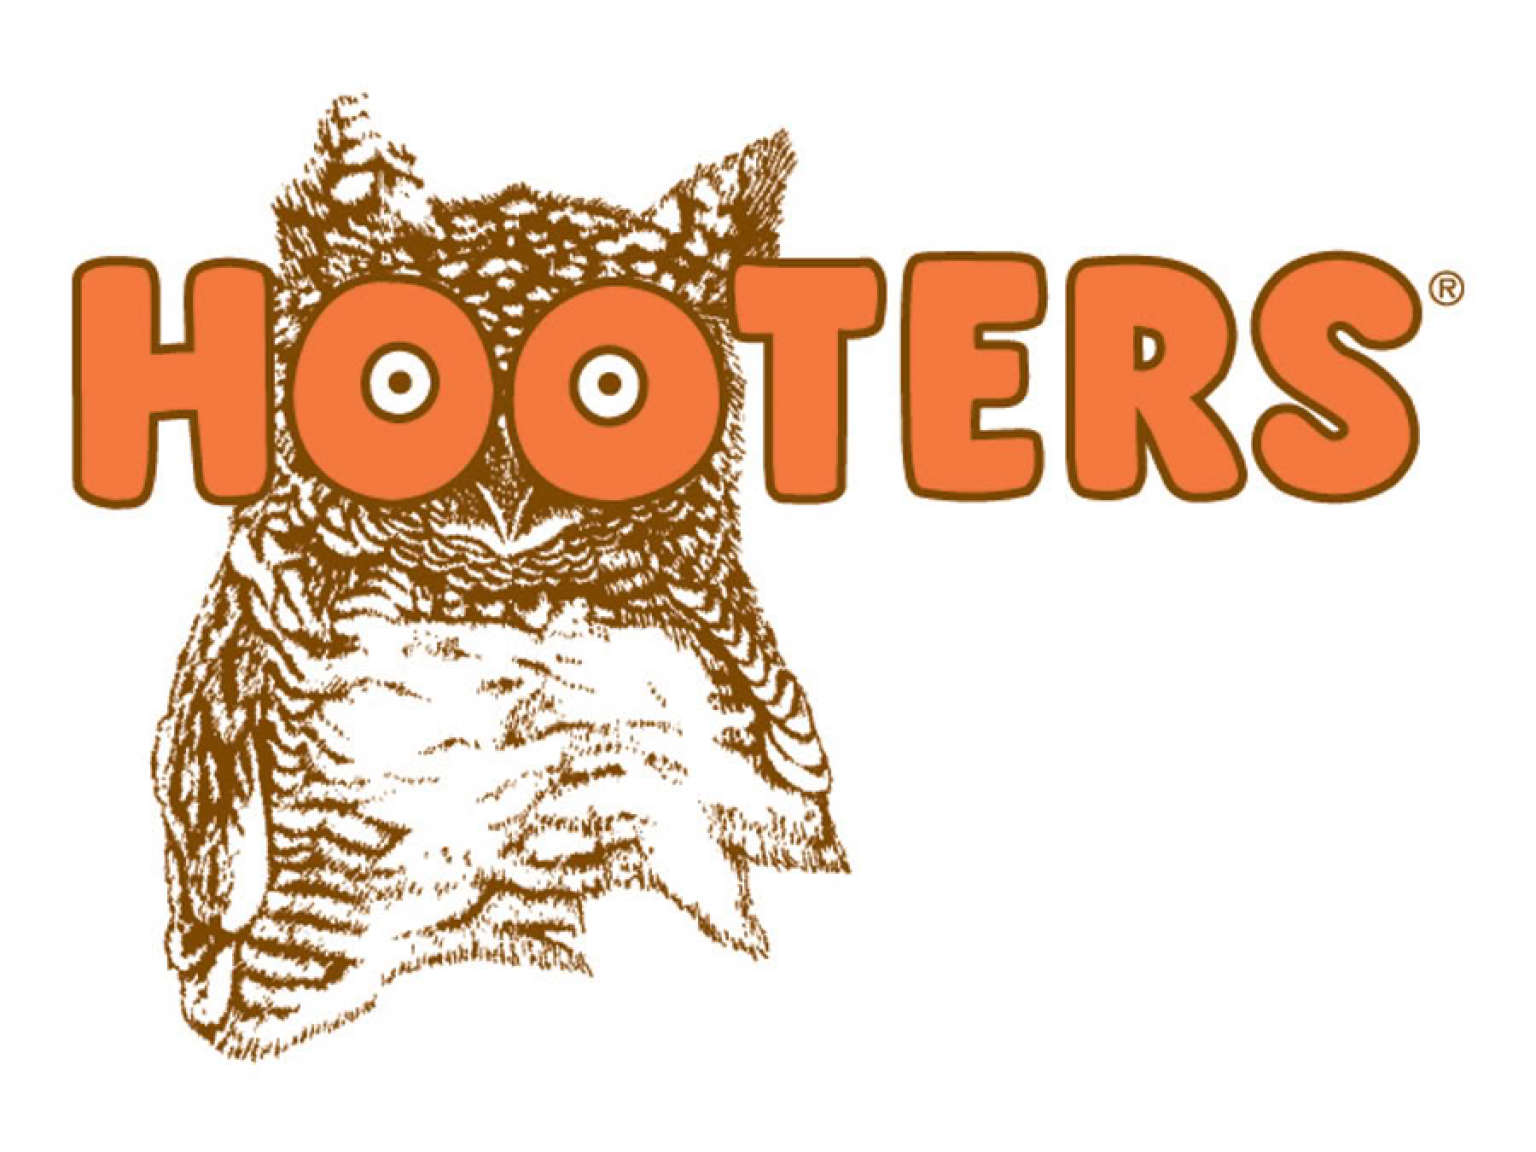 Hooters new Logos.